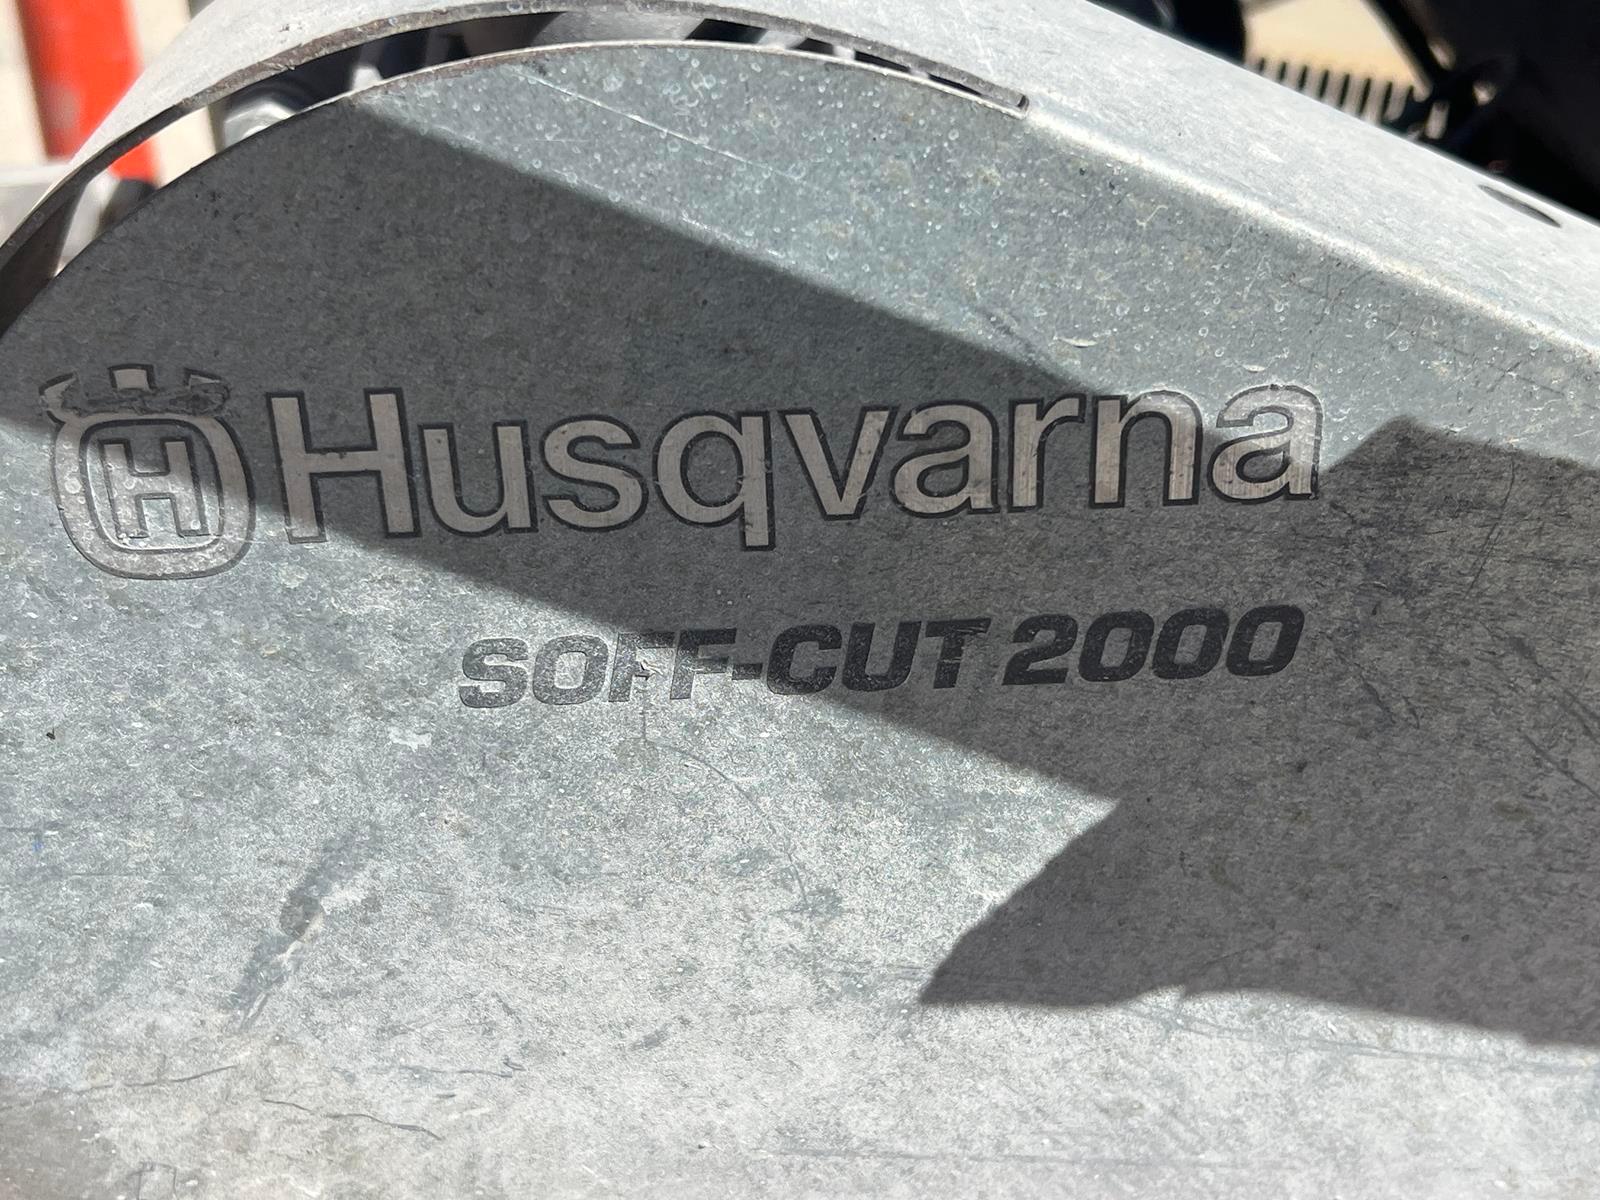 Husqvarna Soff-cut 2000 Concrete Saw